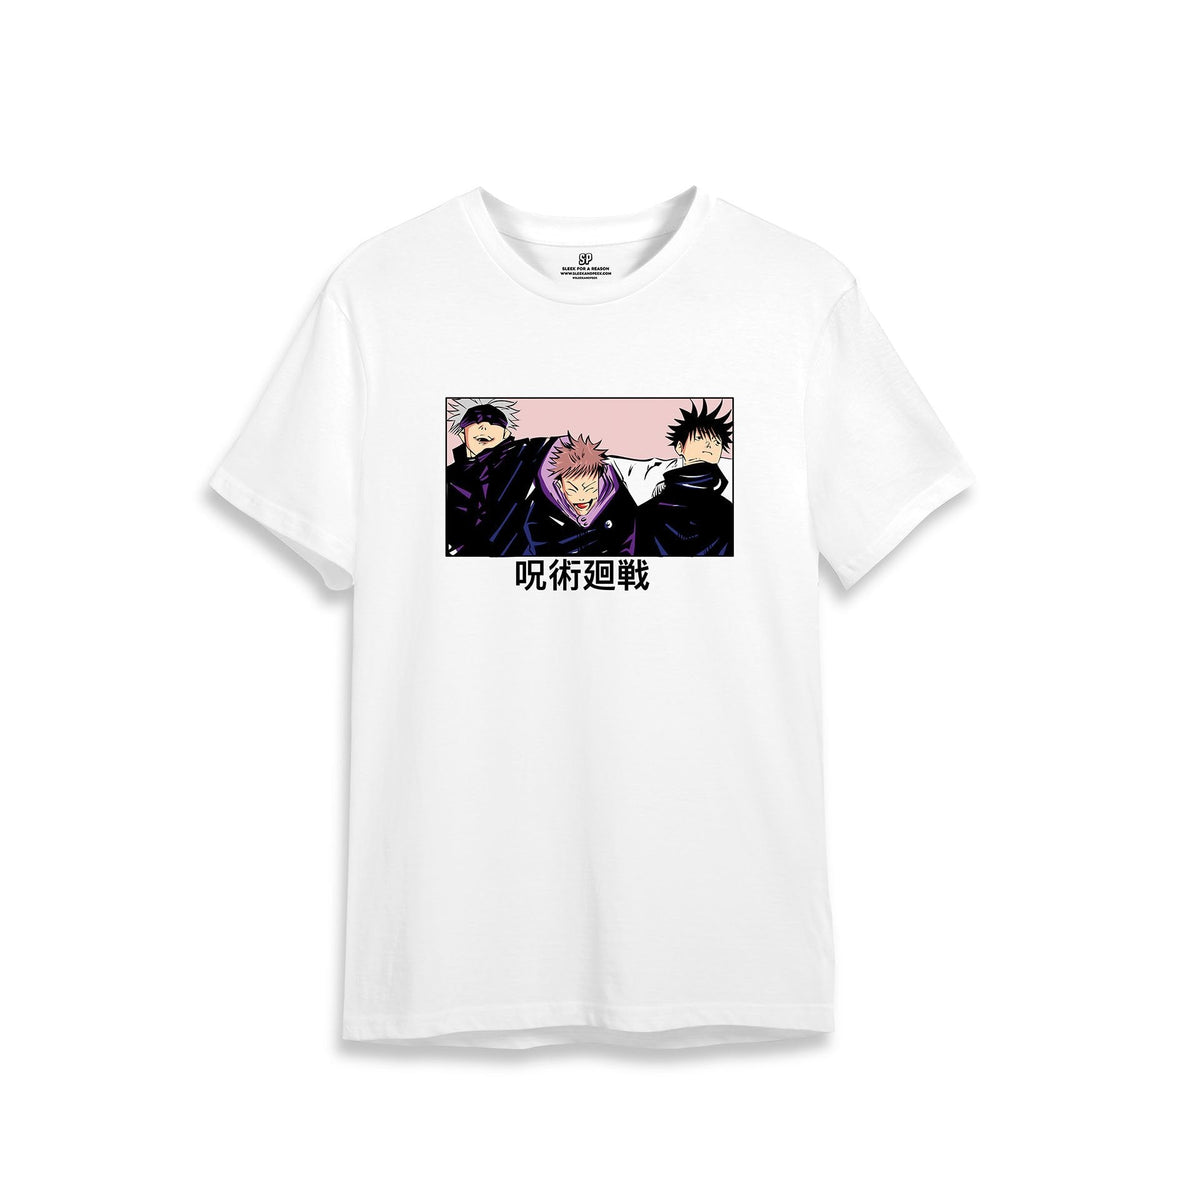 The Trio - Jujutsu Kaisen T-shirt - Sleek&Peek